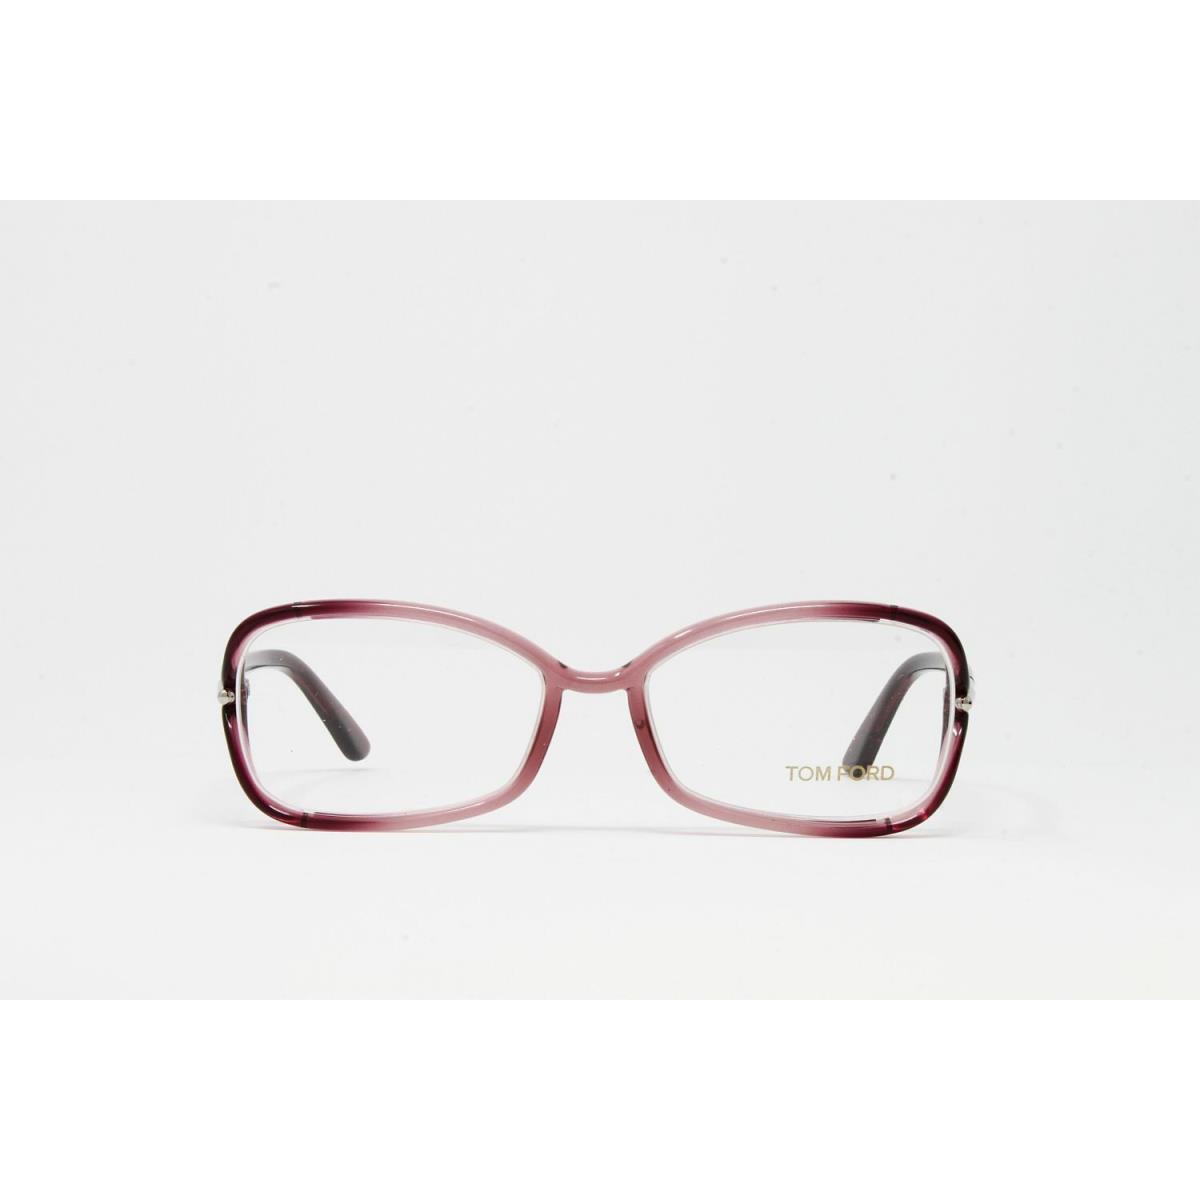 Tom Ford eyeglasses  - Purple Frame 1